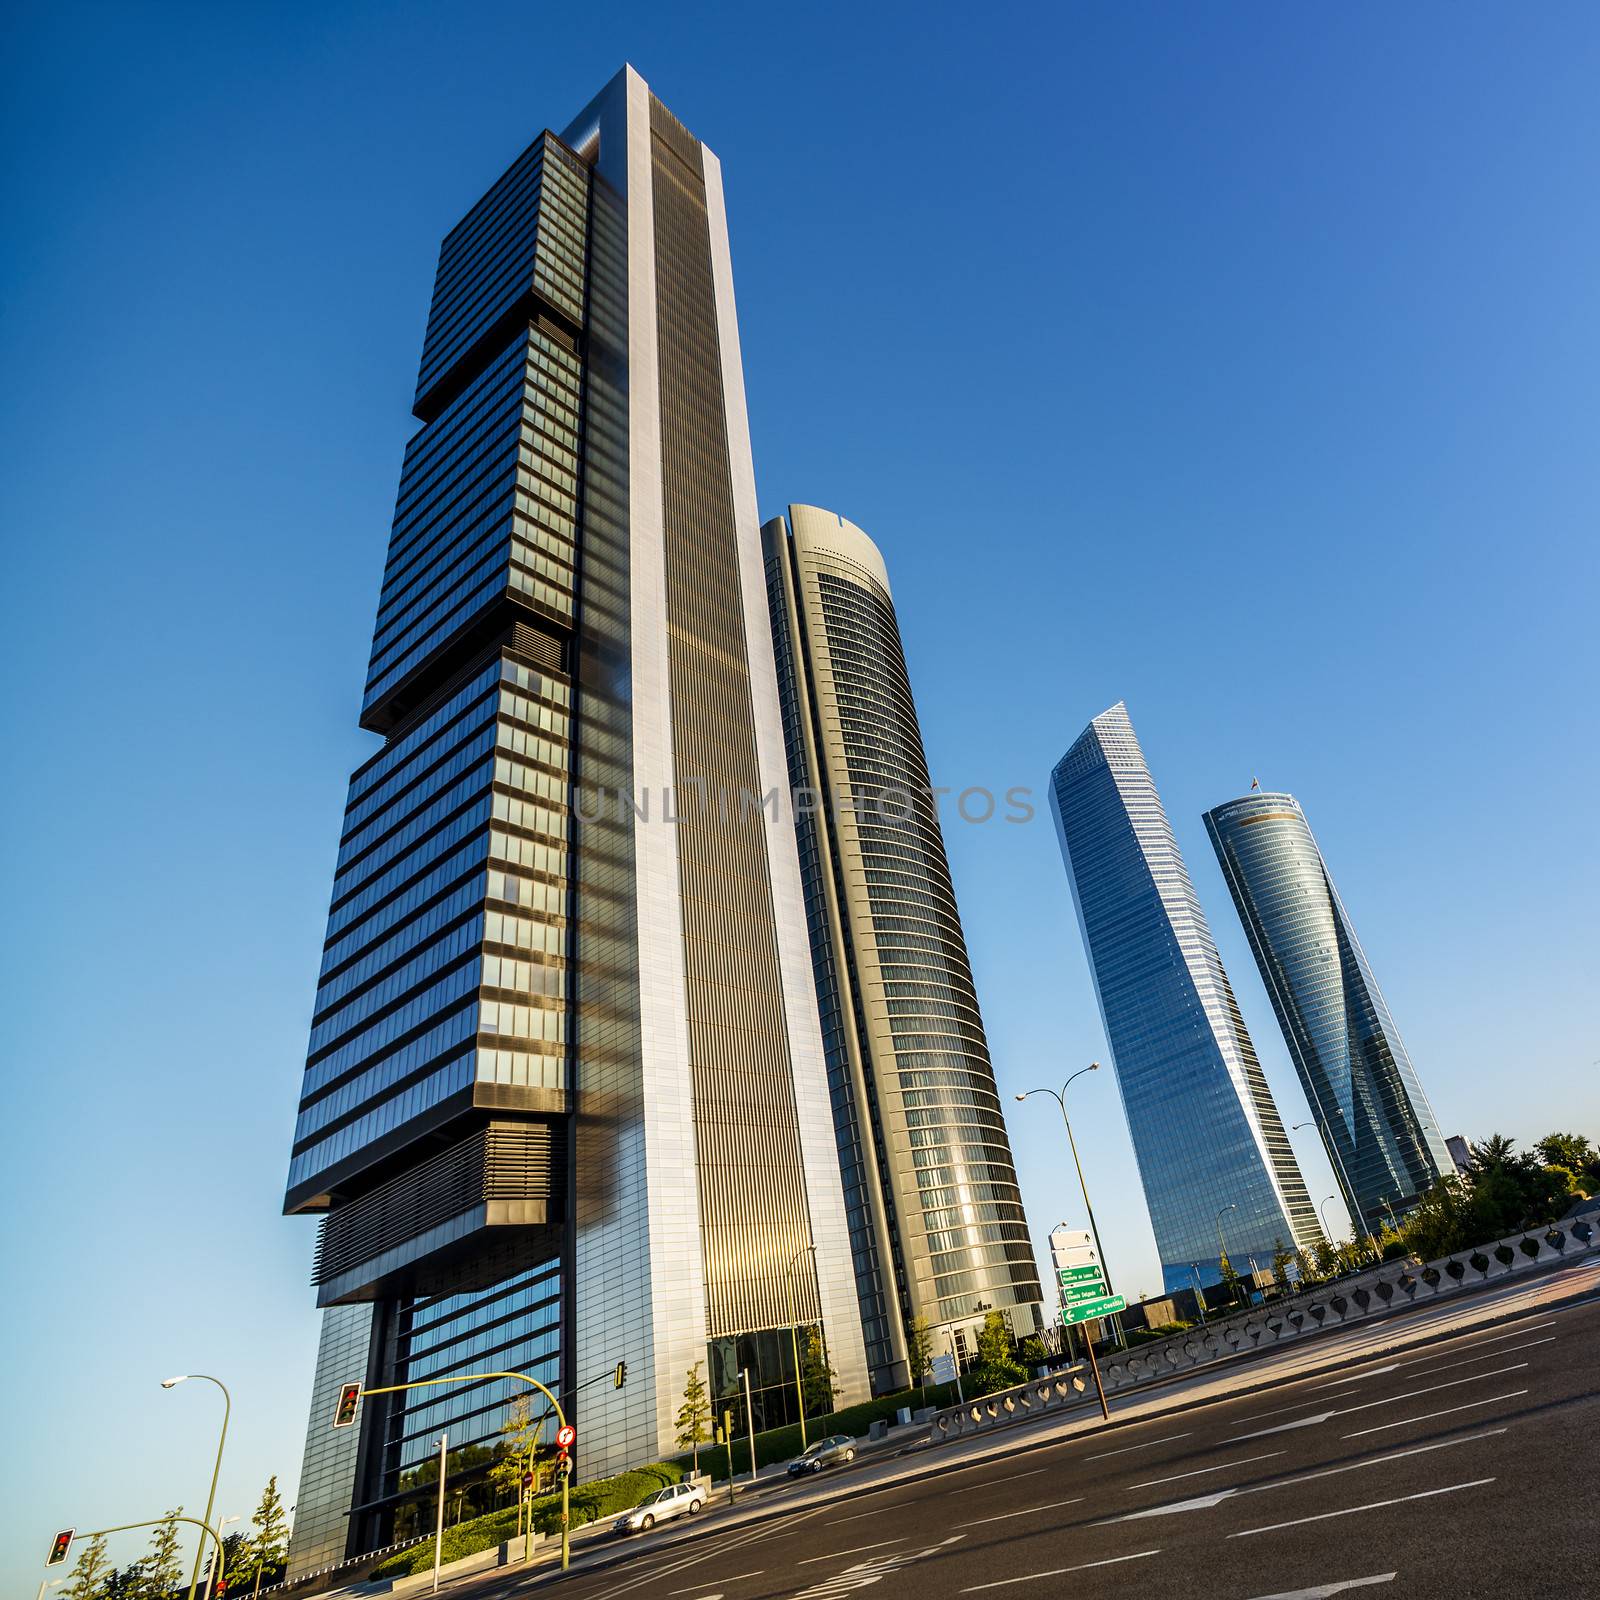 four modern skyscrapers by ventdusud